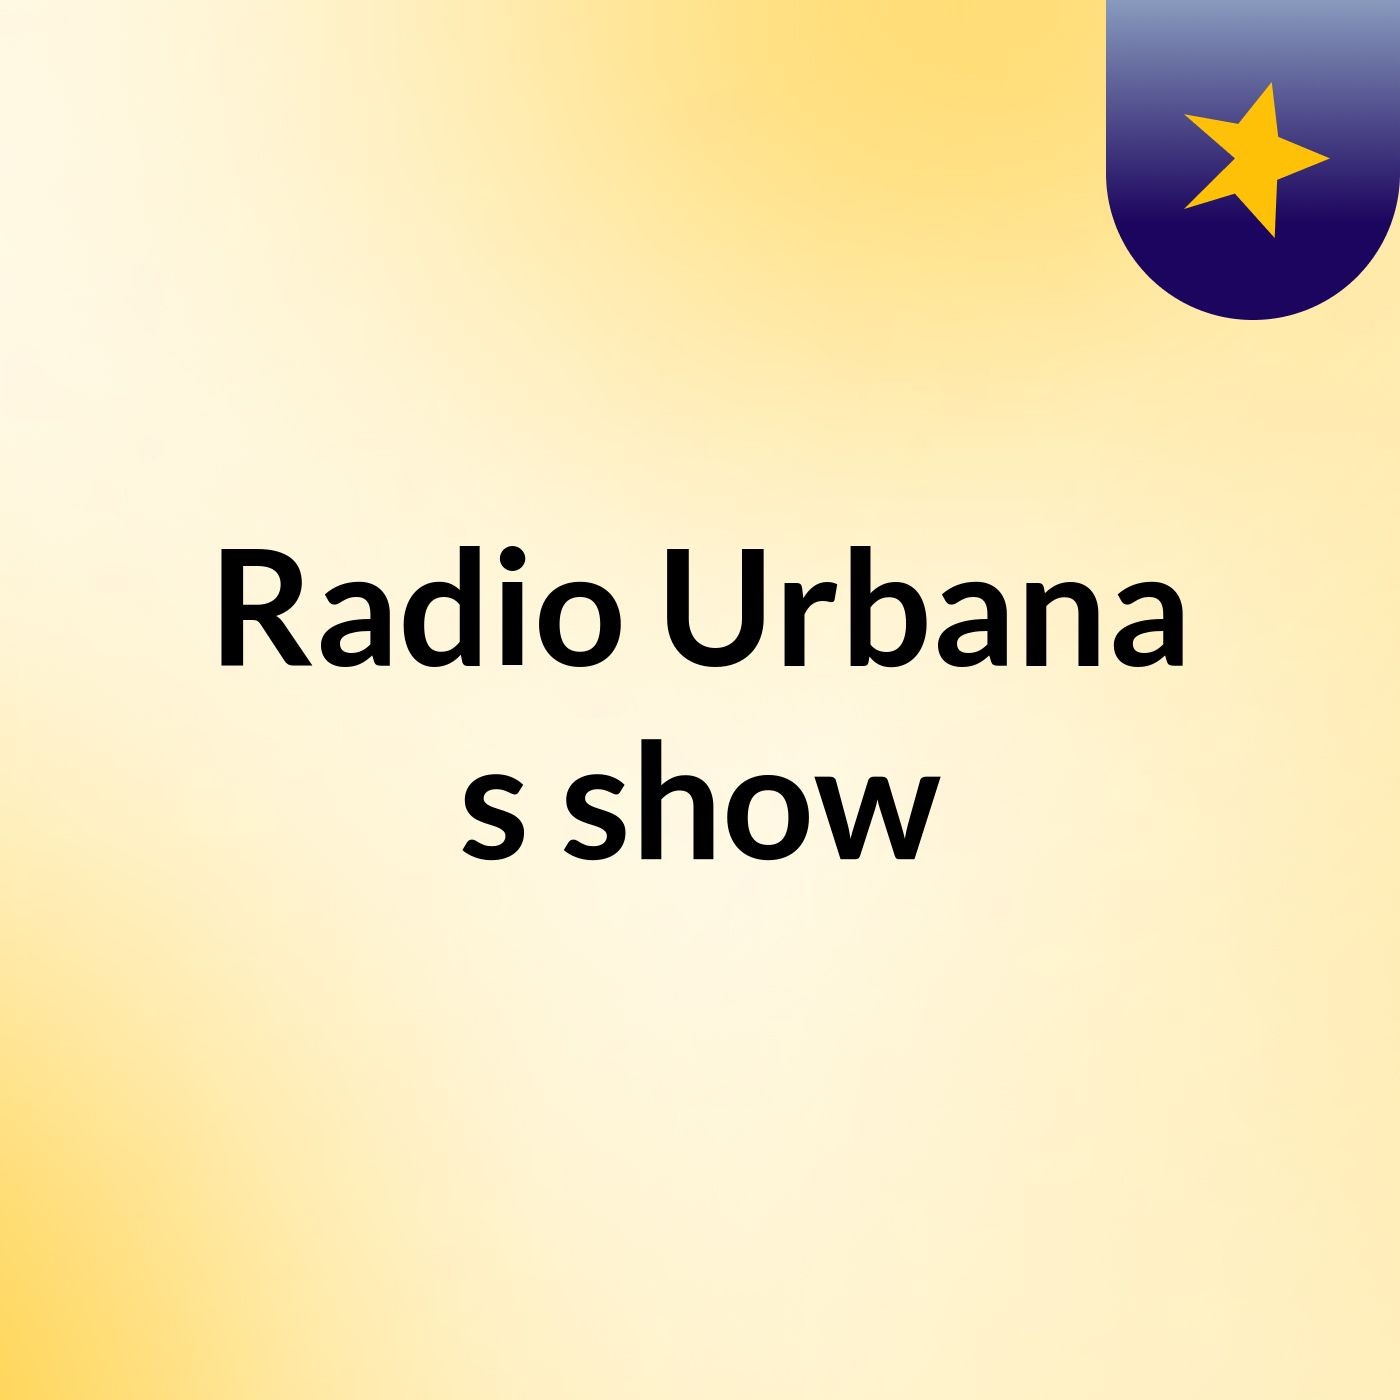 Radio Urbana's show